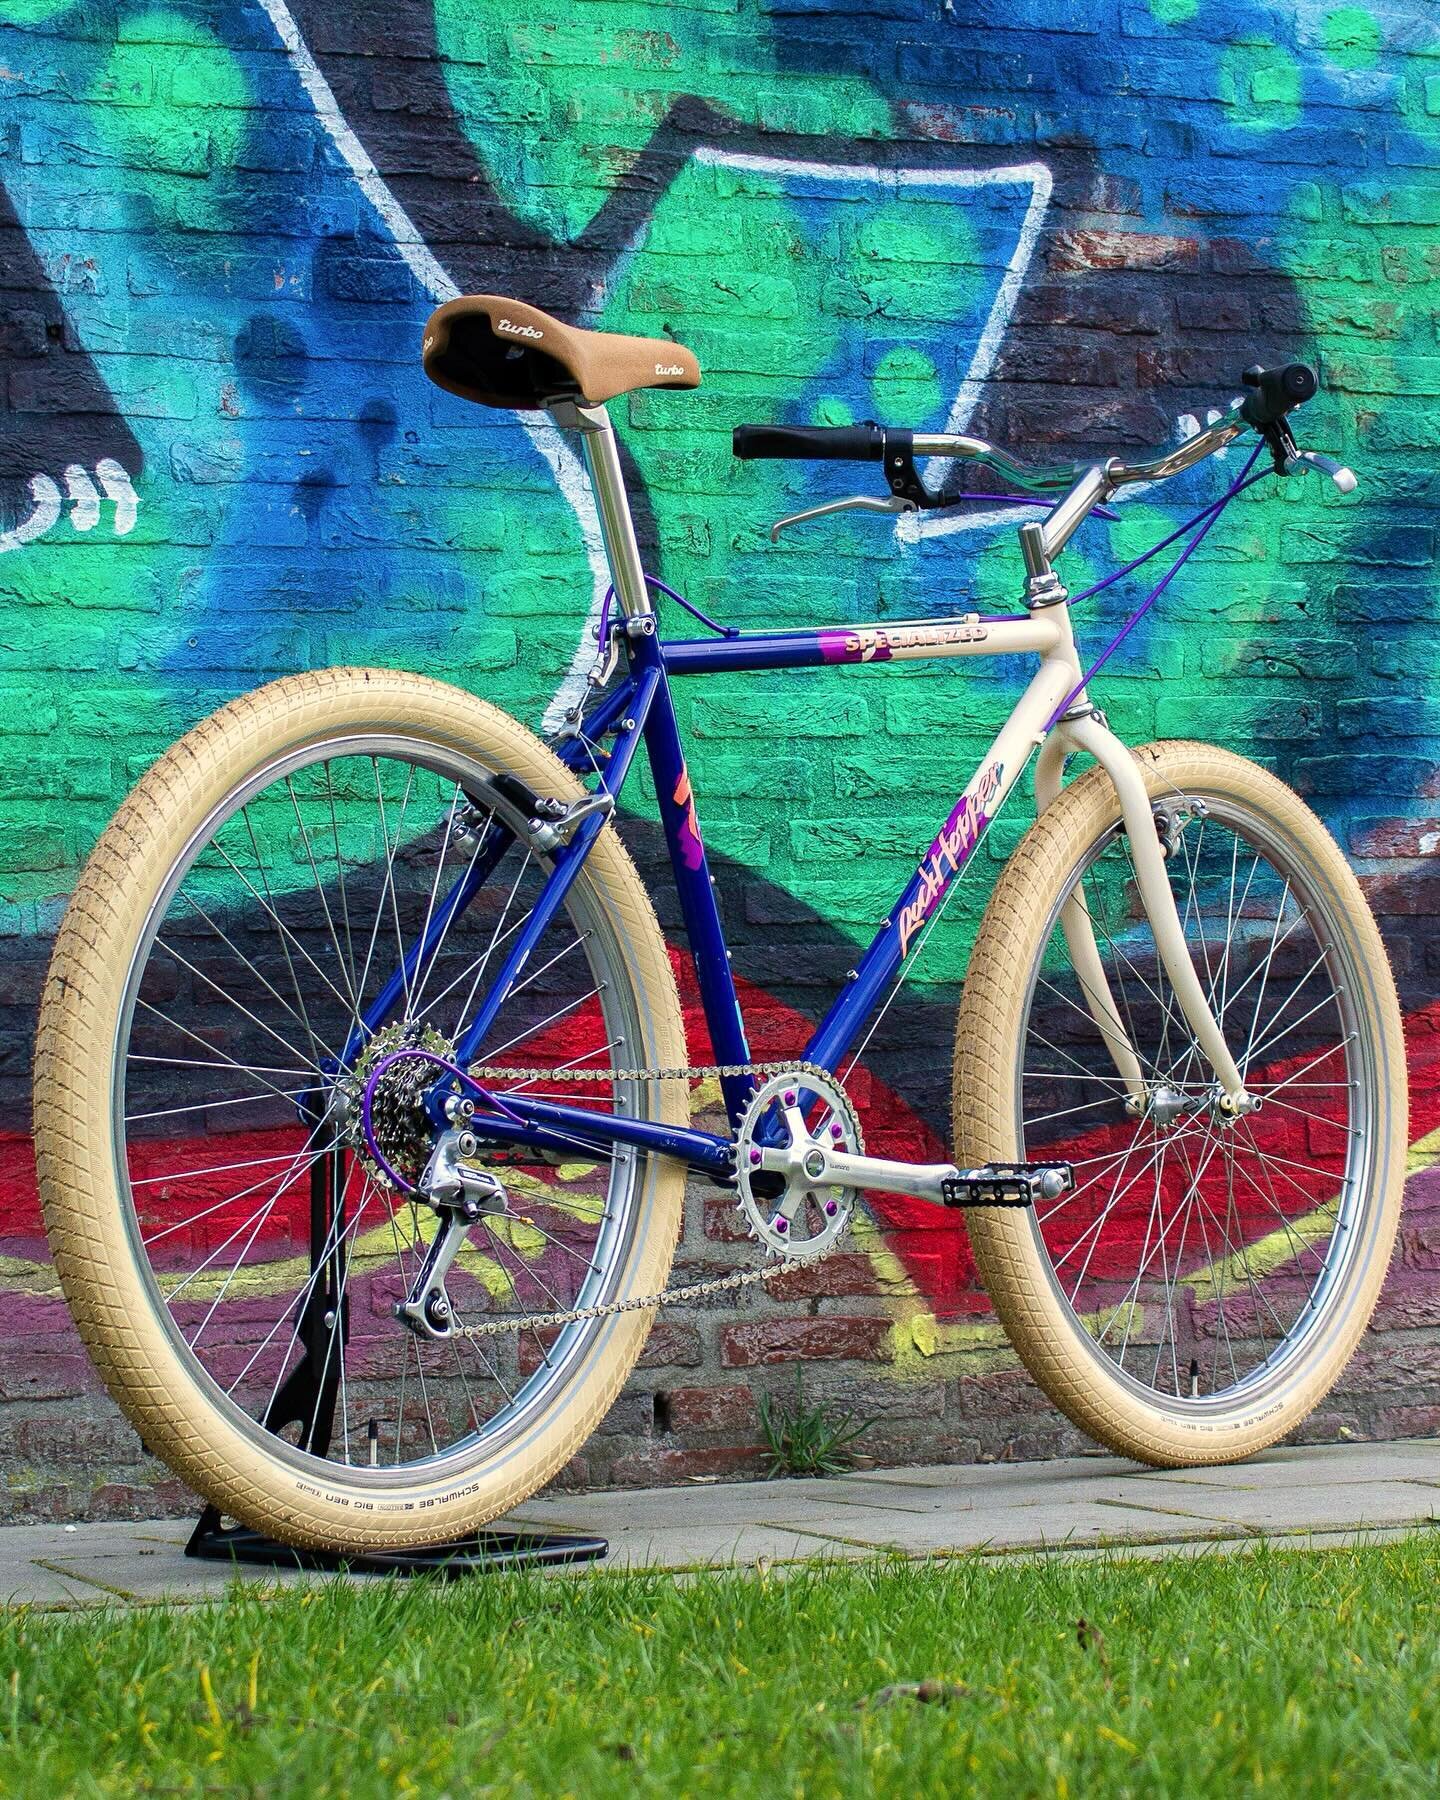 More bike, more colour, more stick 🎨

______________

#TheUpcyclist #specializedrockhopper #steelvintagebikes #atb #retrobike #neoretrobike #26aintdead #steelisreal #steelisrealmtb #groningen